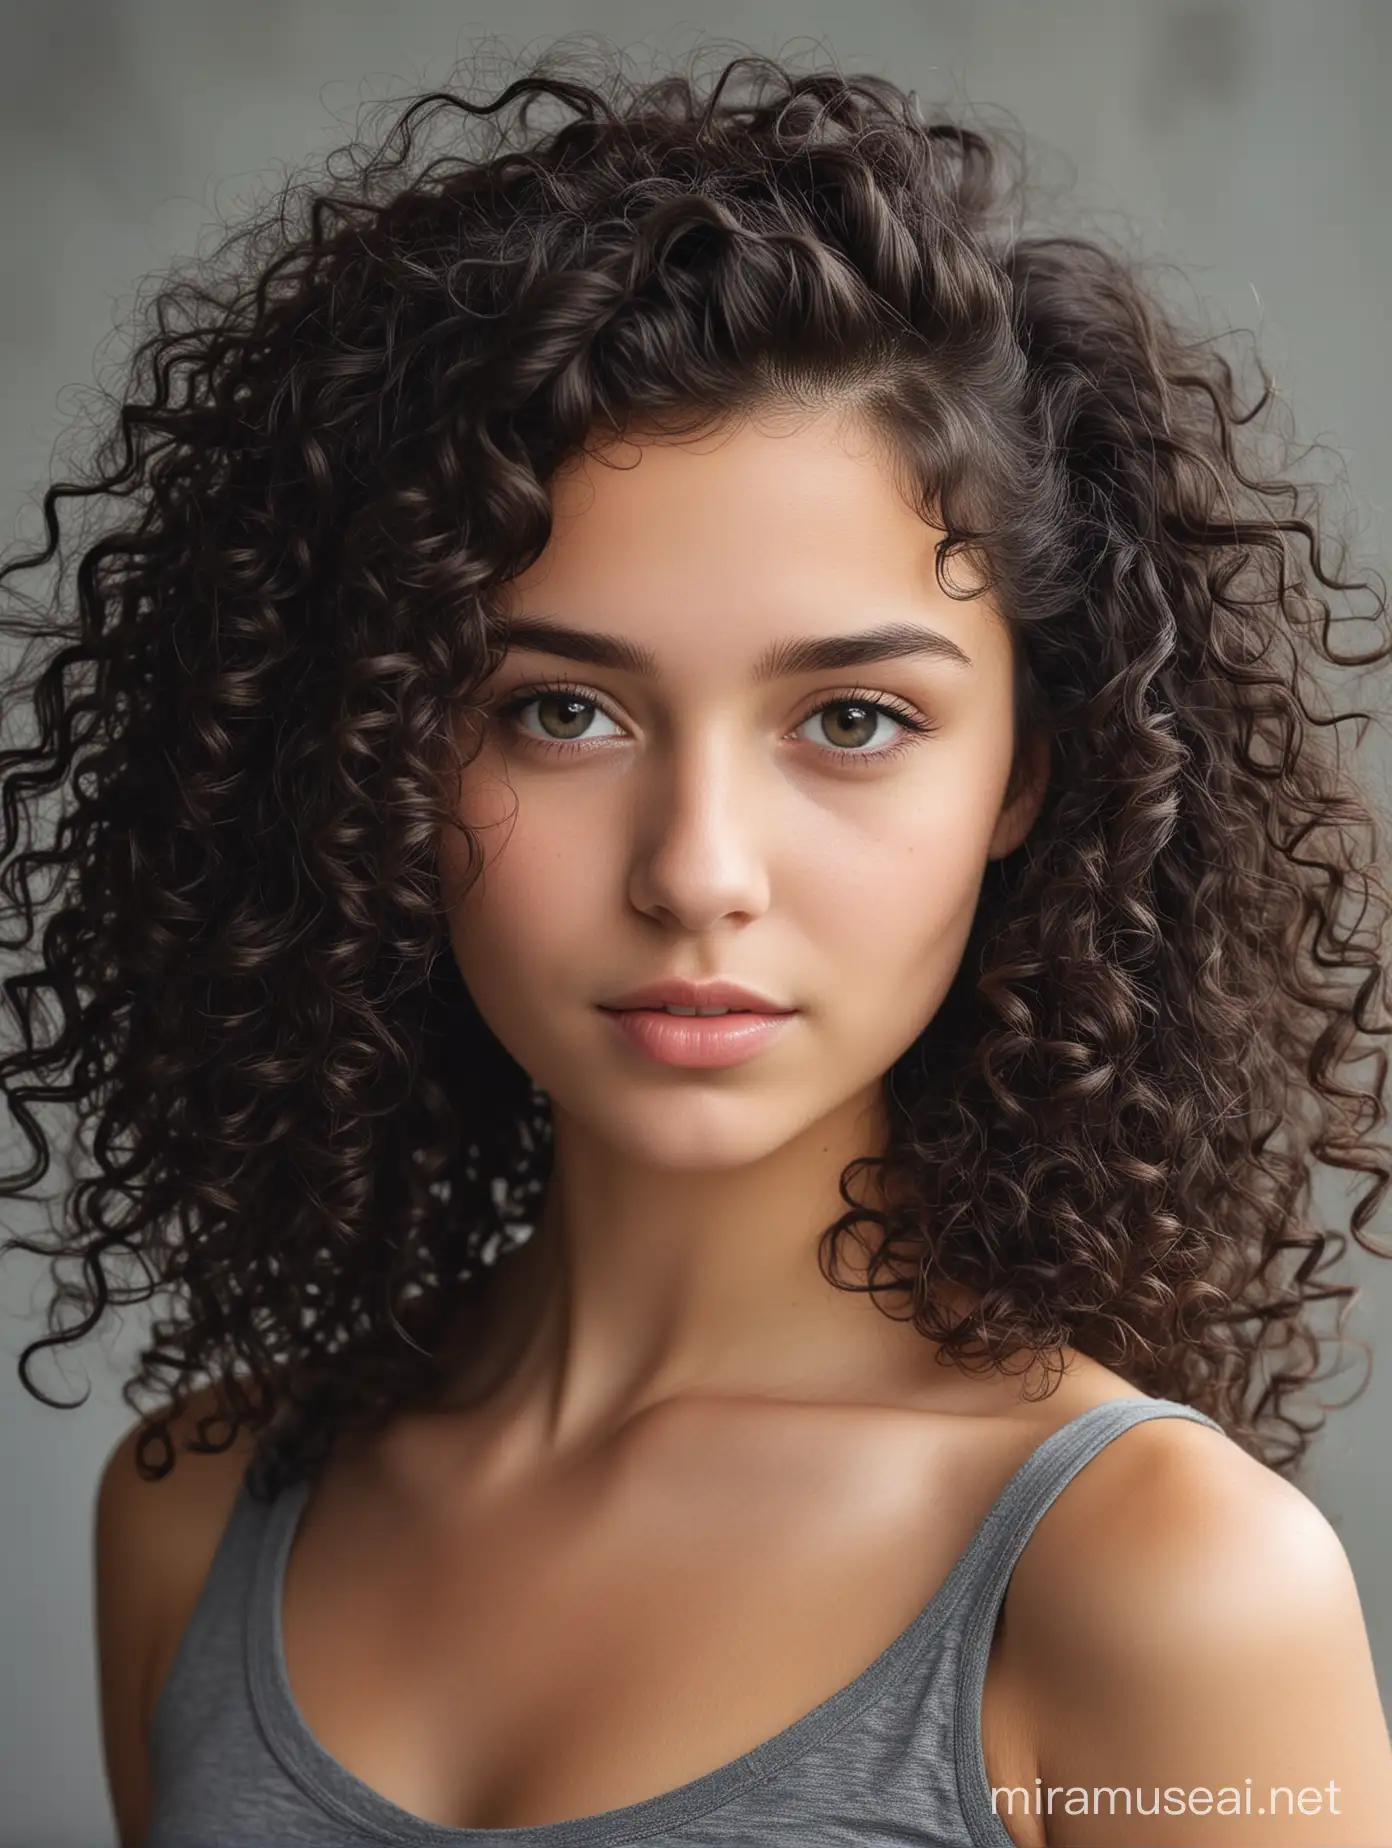 Girl with dark curly hair